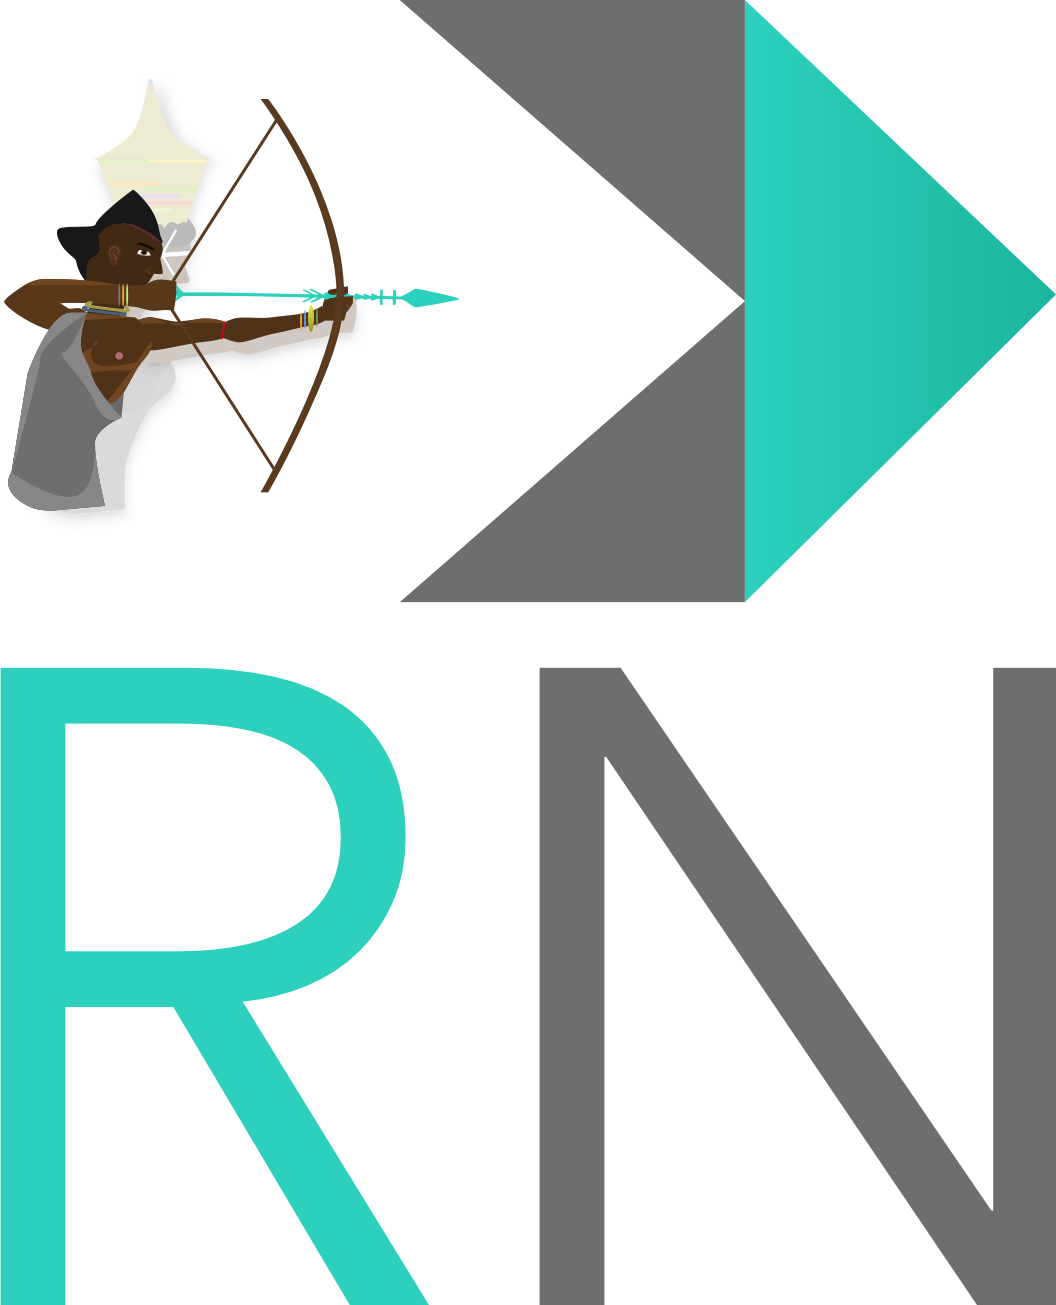 RN Logo 1 - Transparent.png